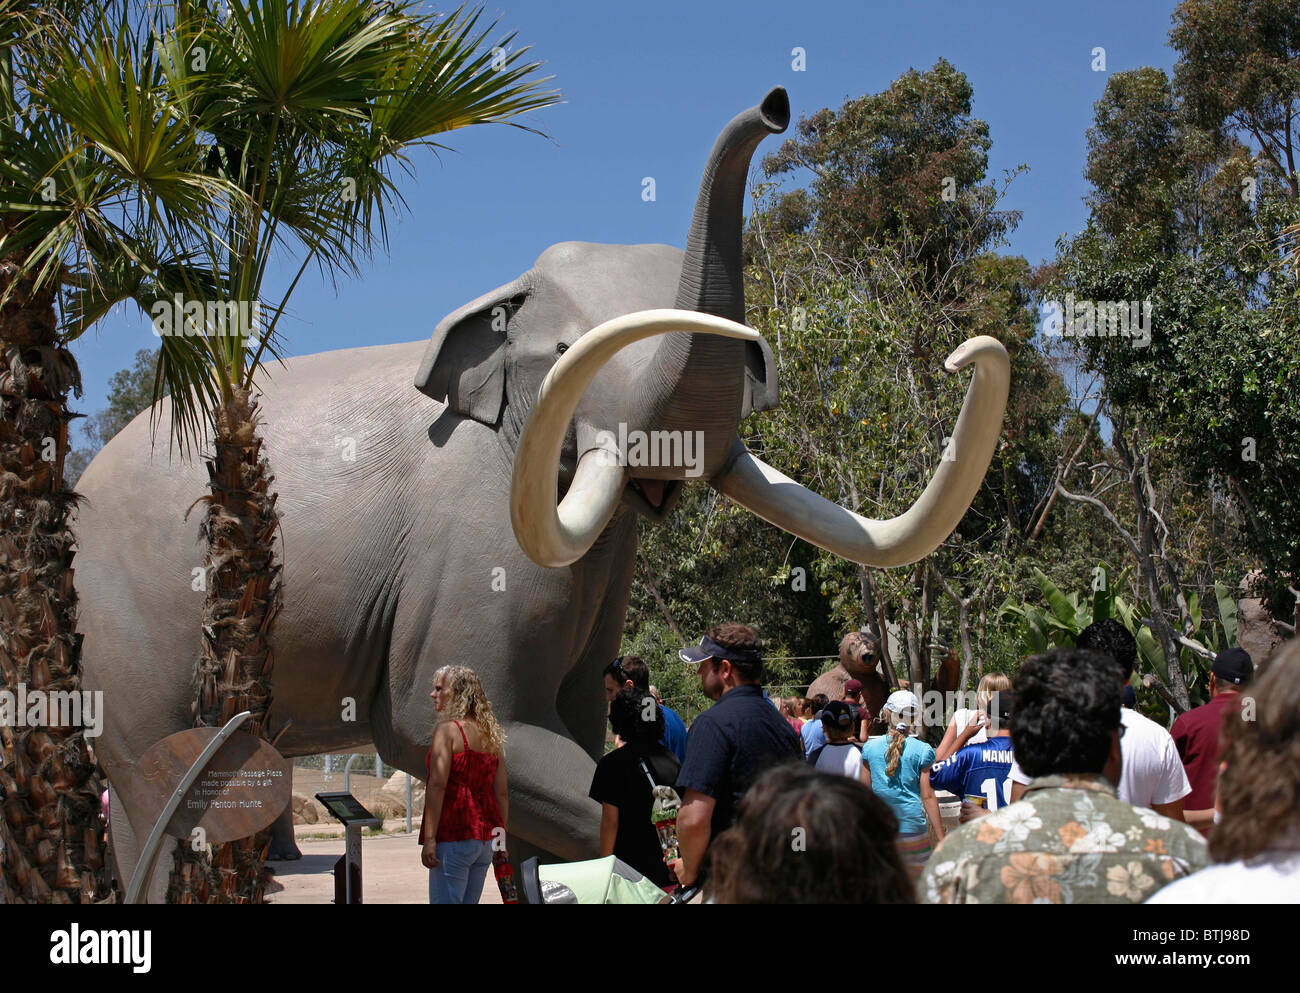 Tourists visit the elephant exhibit at the SAN DIEGO ZOO - CALIFORNIA Stock Photo